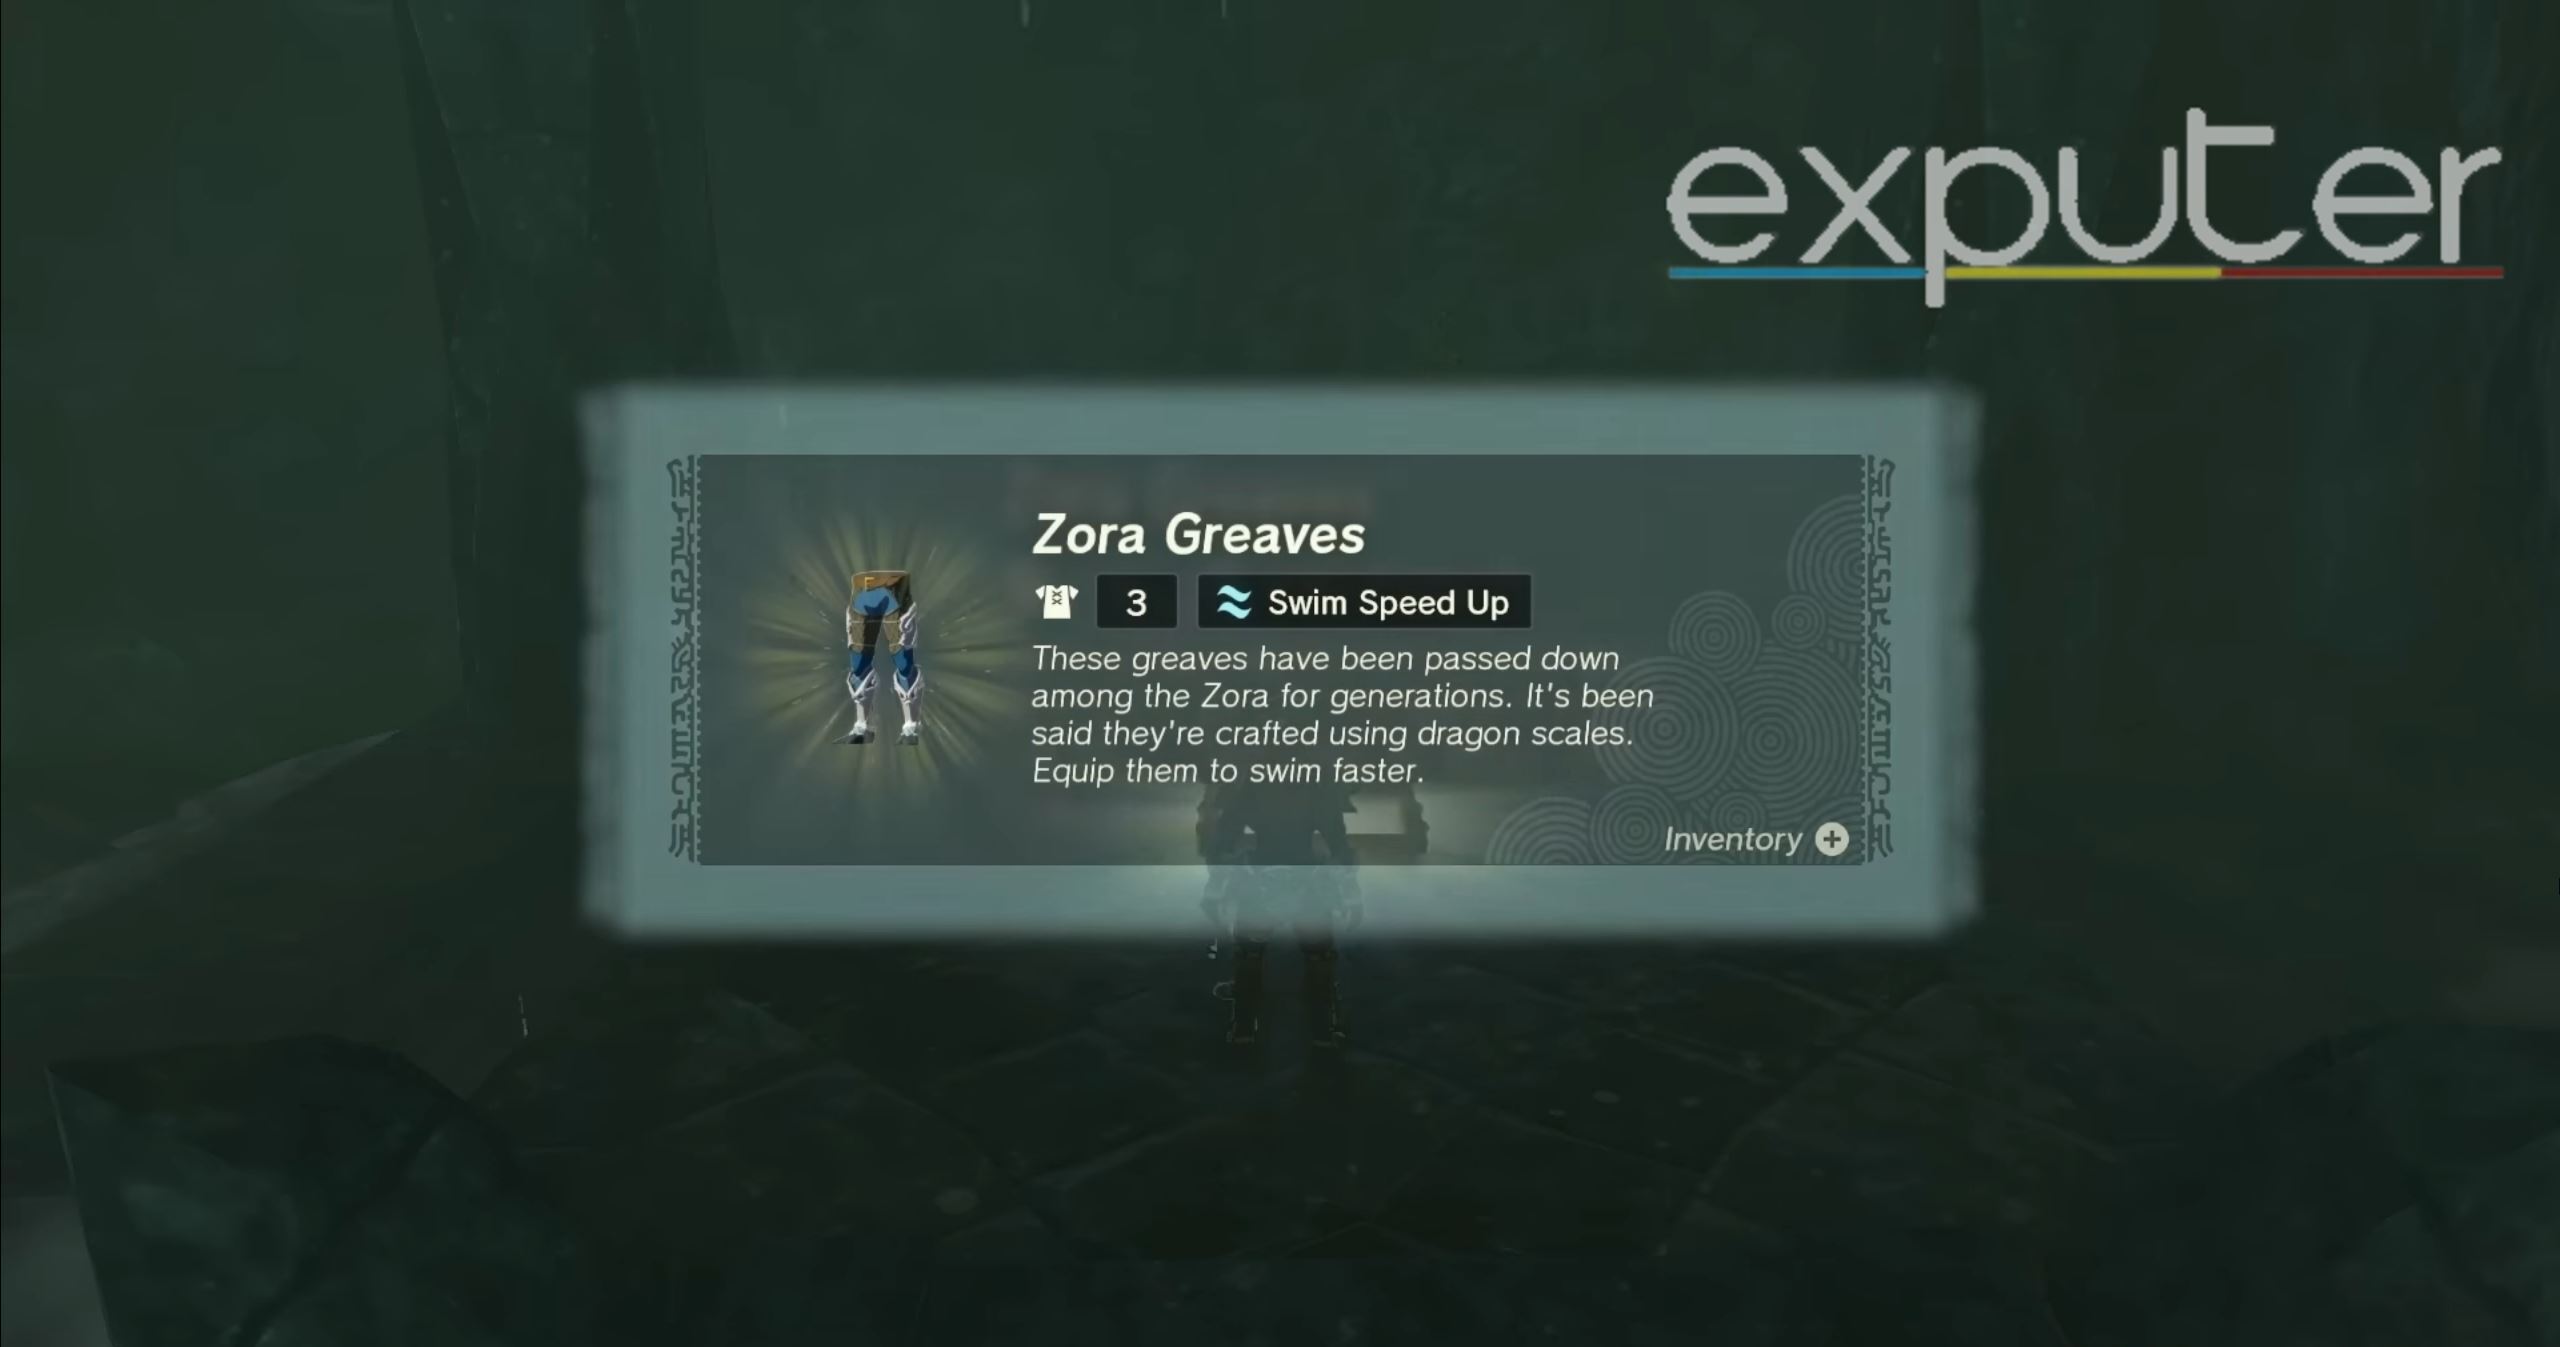 The zora greaves armor